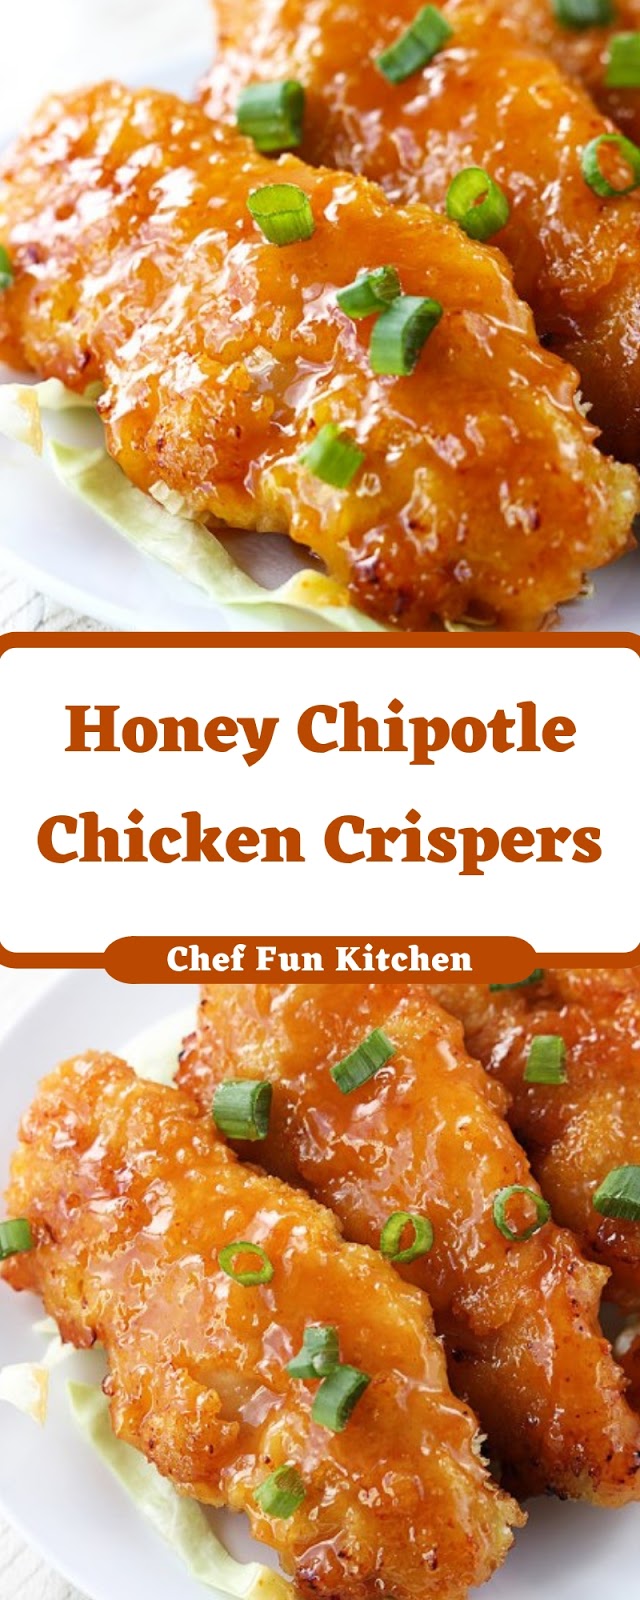 Honey Chipotle Chicken Crispers